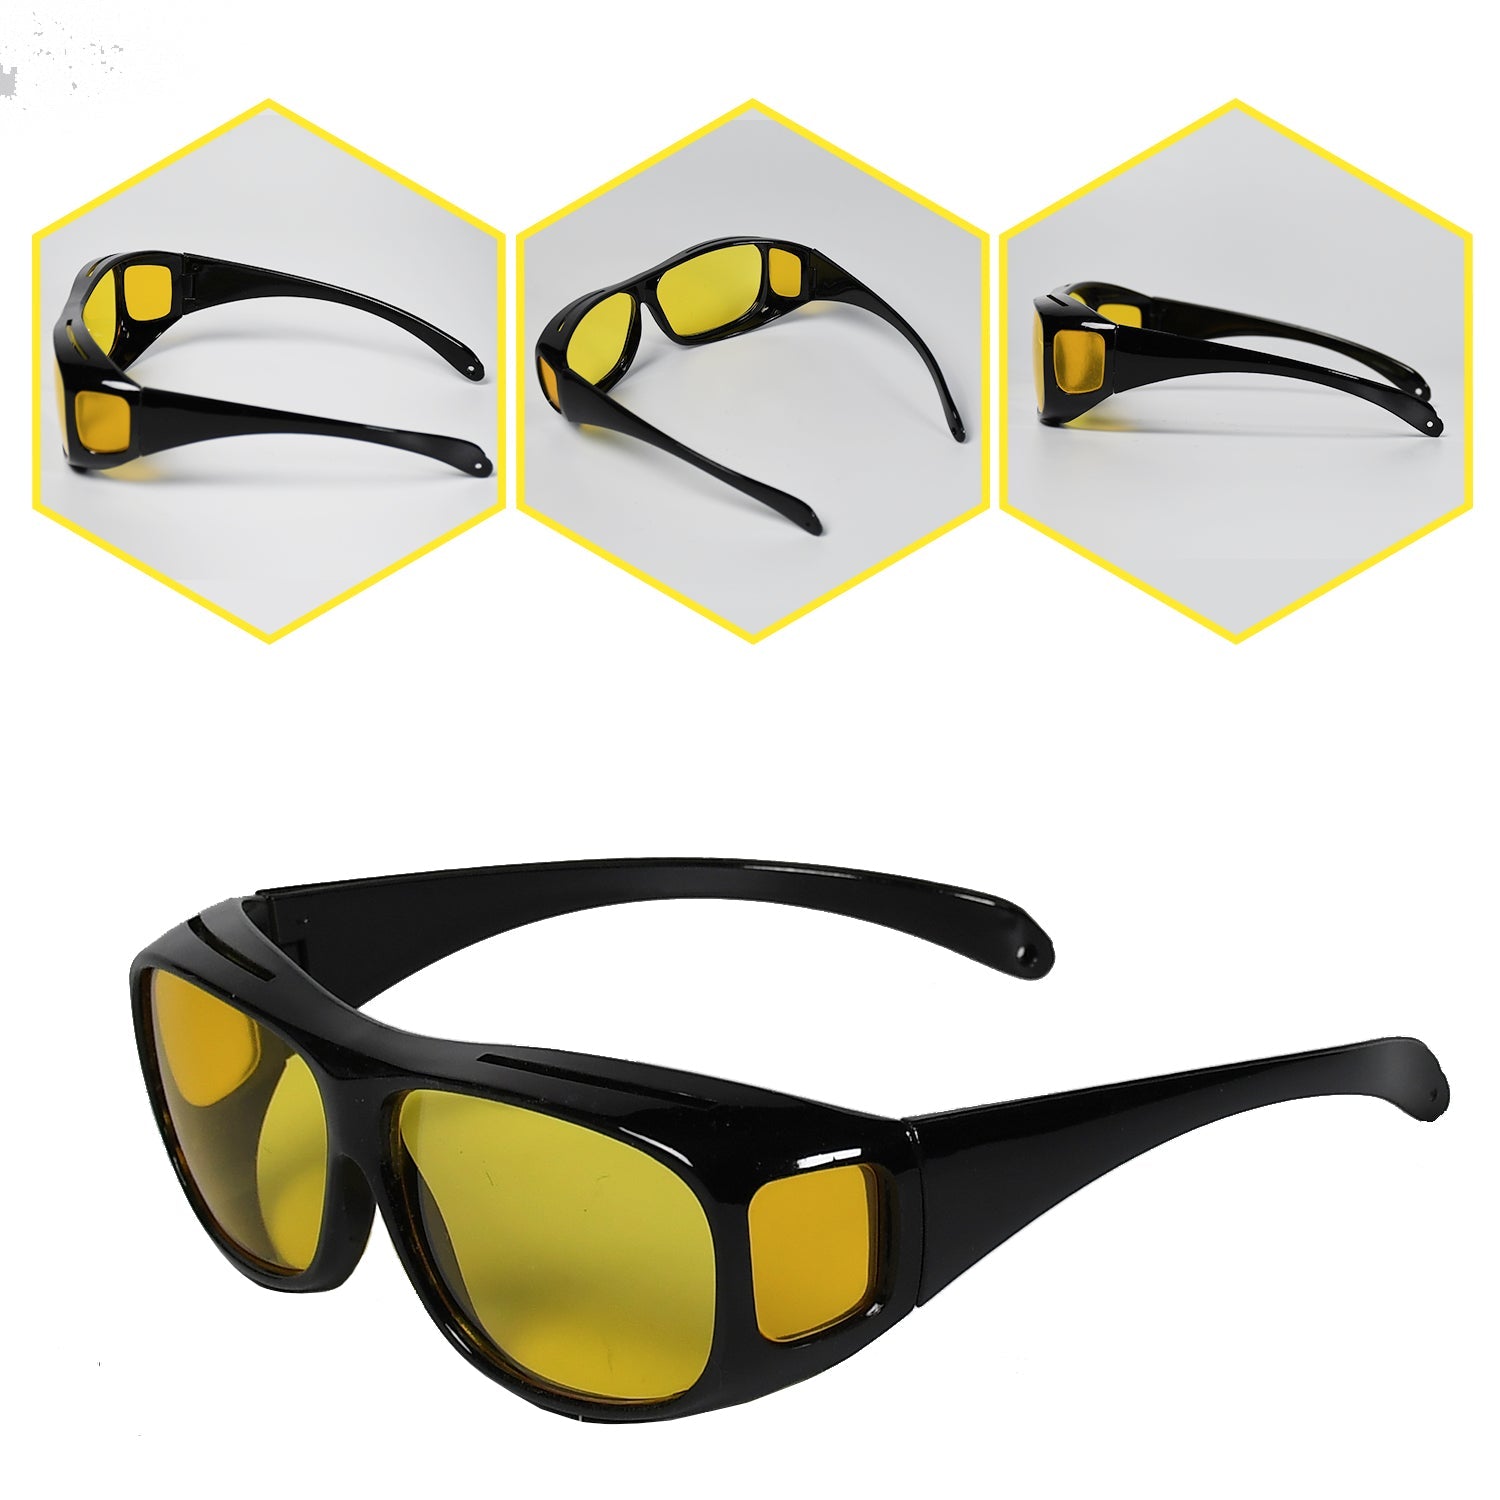 7704  Night Driving Polarized HD Vision Glasses | Anti Glare 100% UV Protected Goggles | Night Bike Riding Car driving Glasses For Men & Women Use 